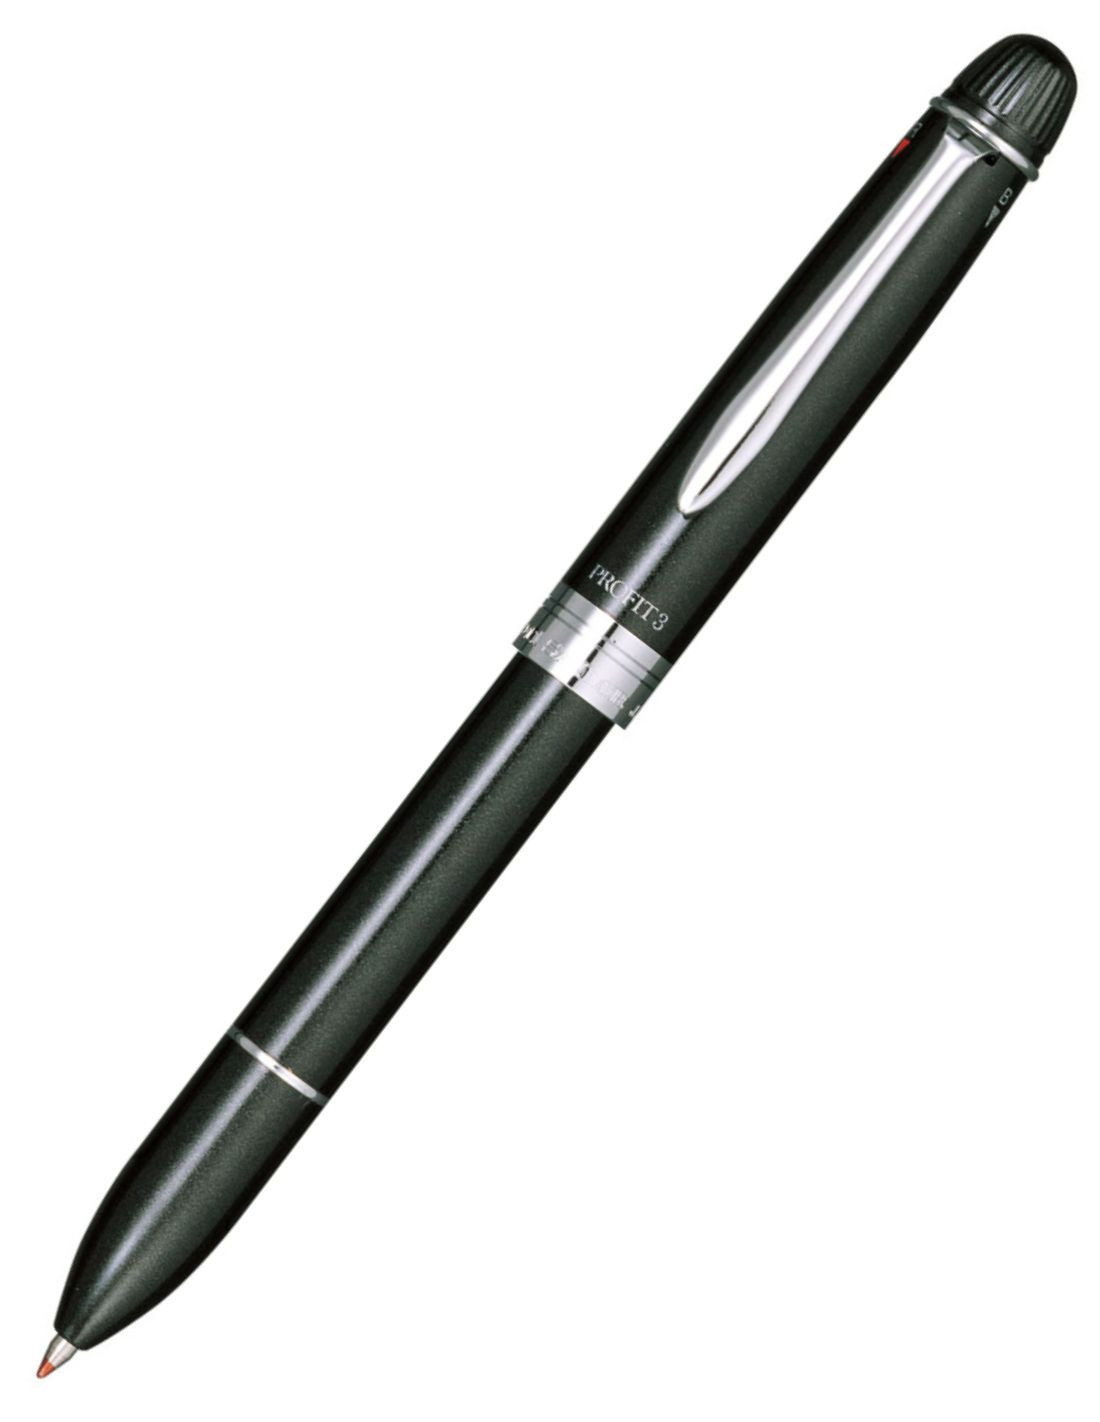 Sailor 1911 Multifunction Pen 3in1 - 2 colors Ballpoint Pen & Mechanical Pencil - Black